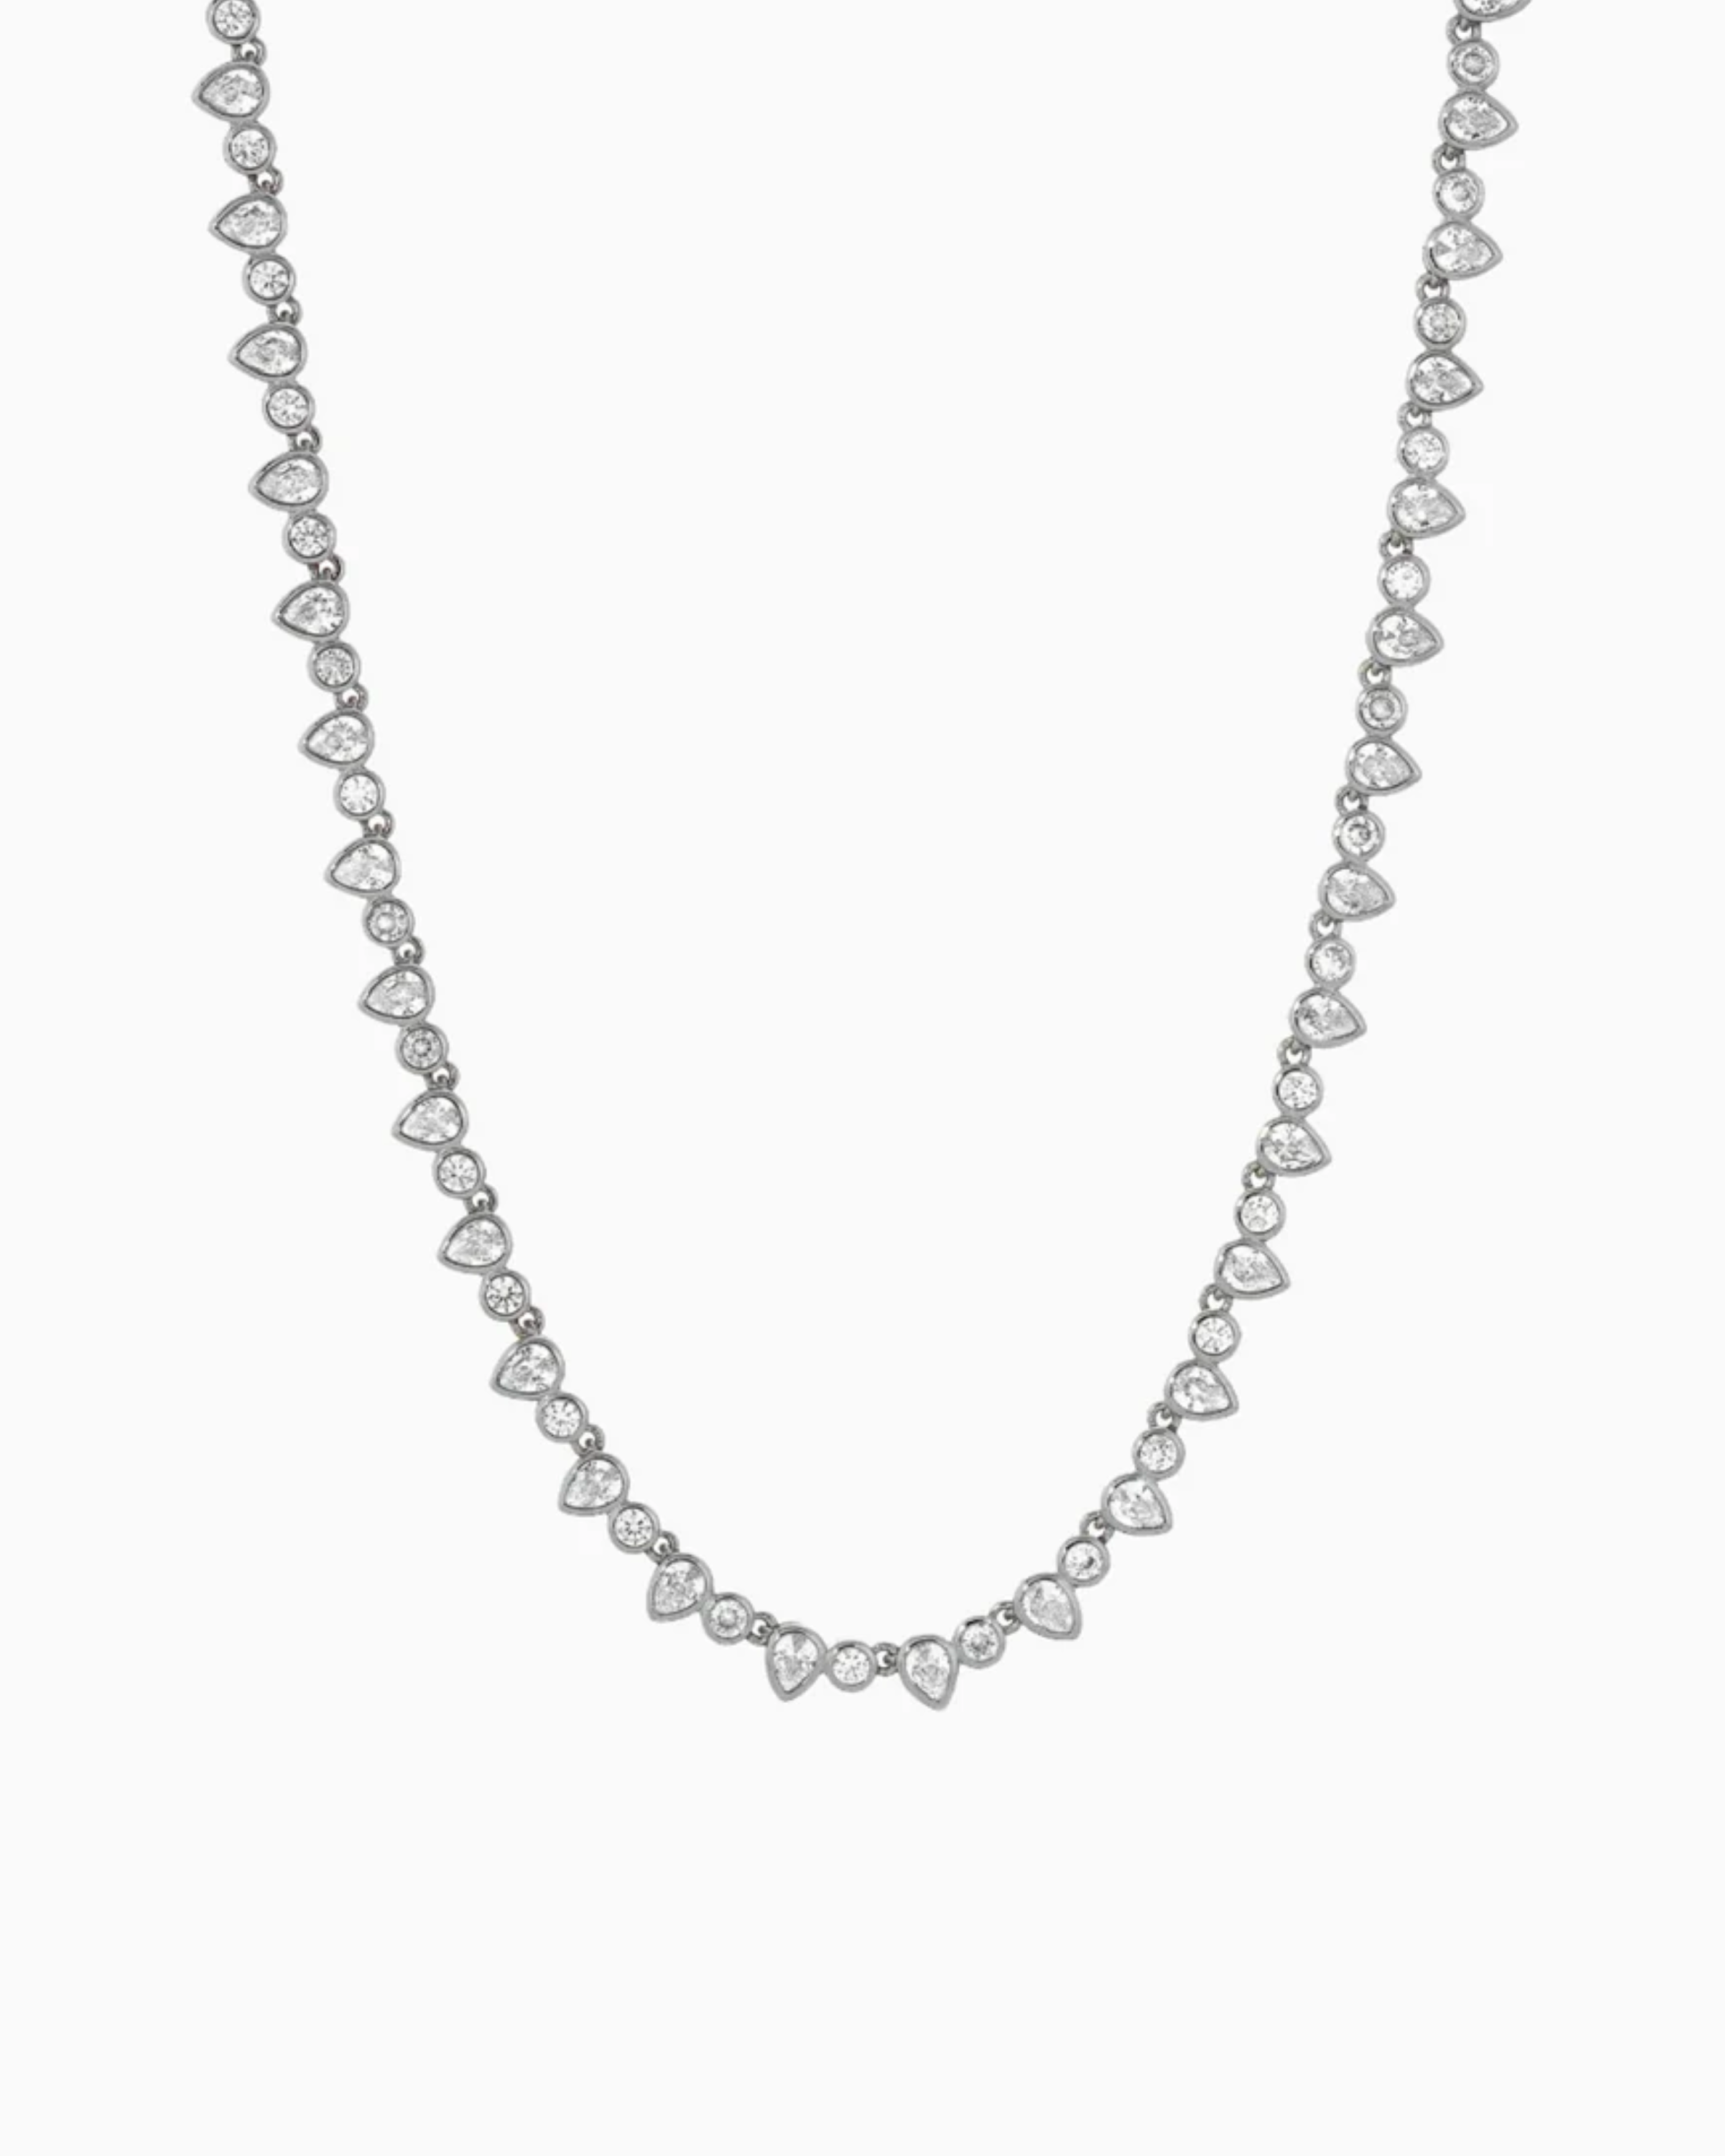 Elizabeth Stone Teardrop Tennis Necklace Clear and Silver